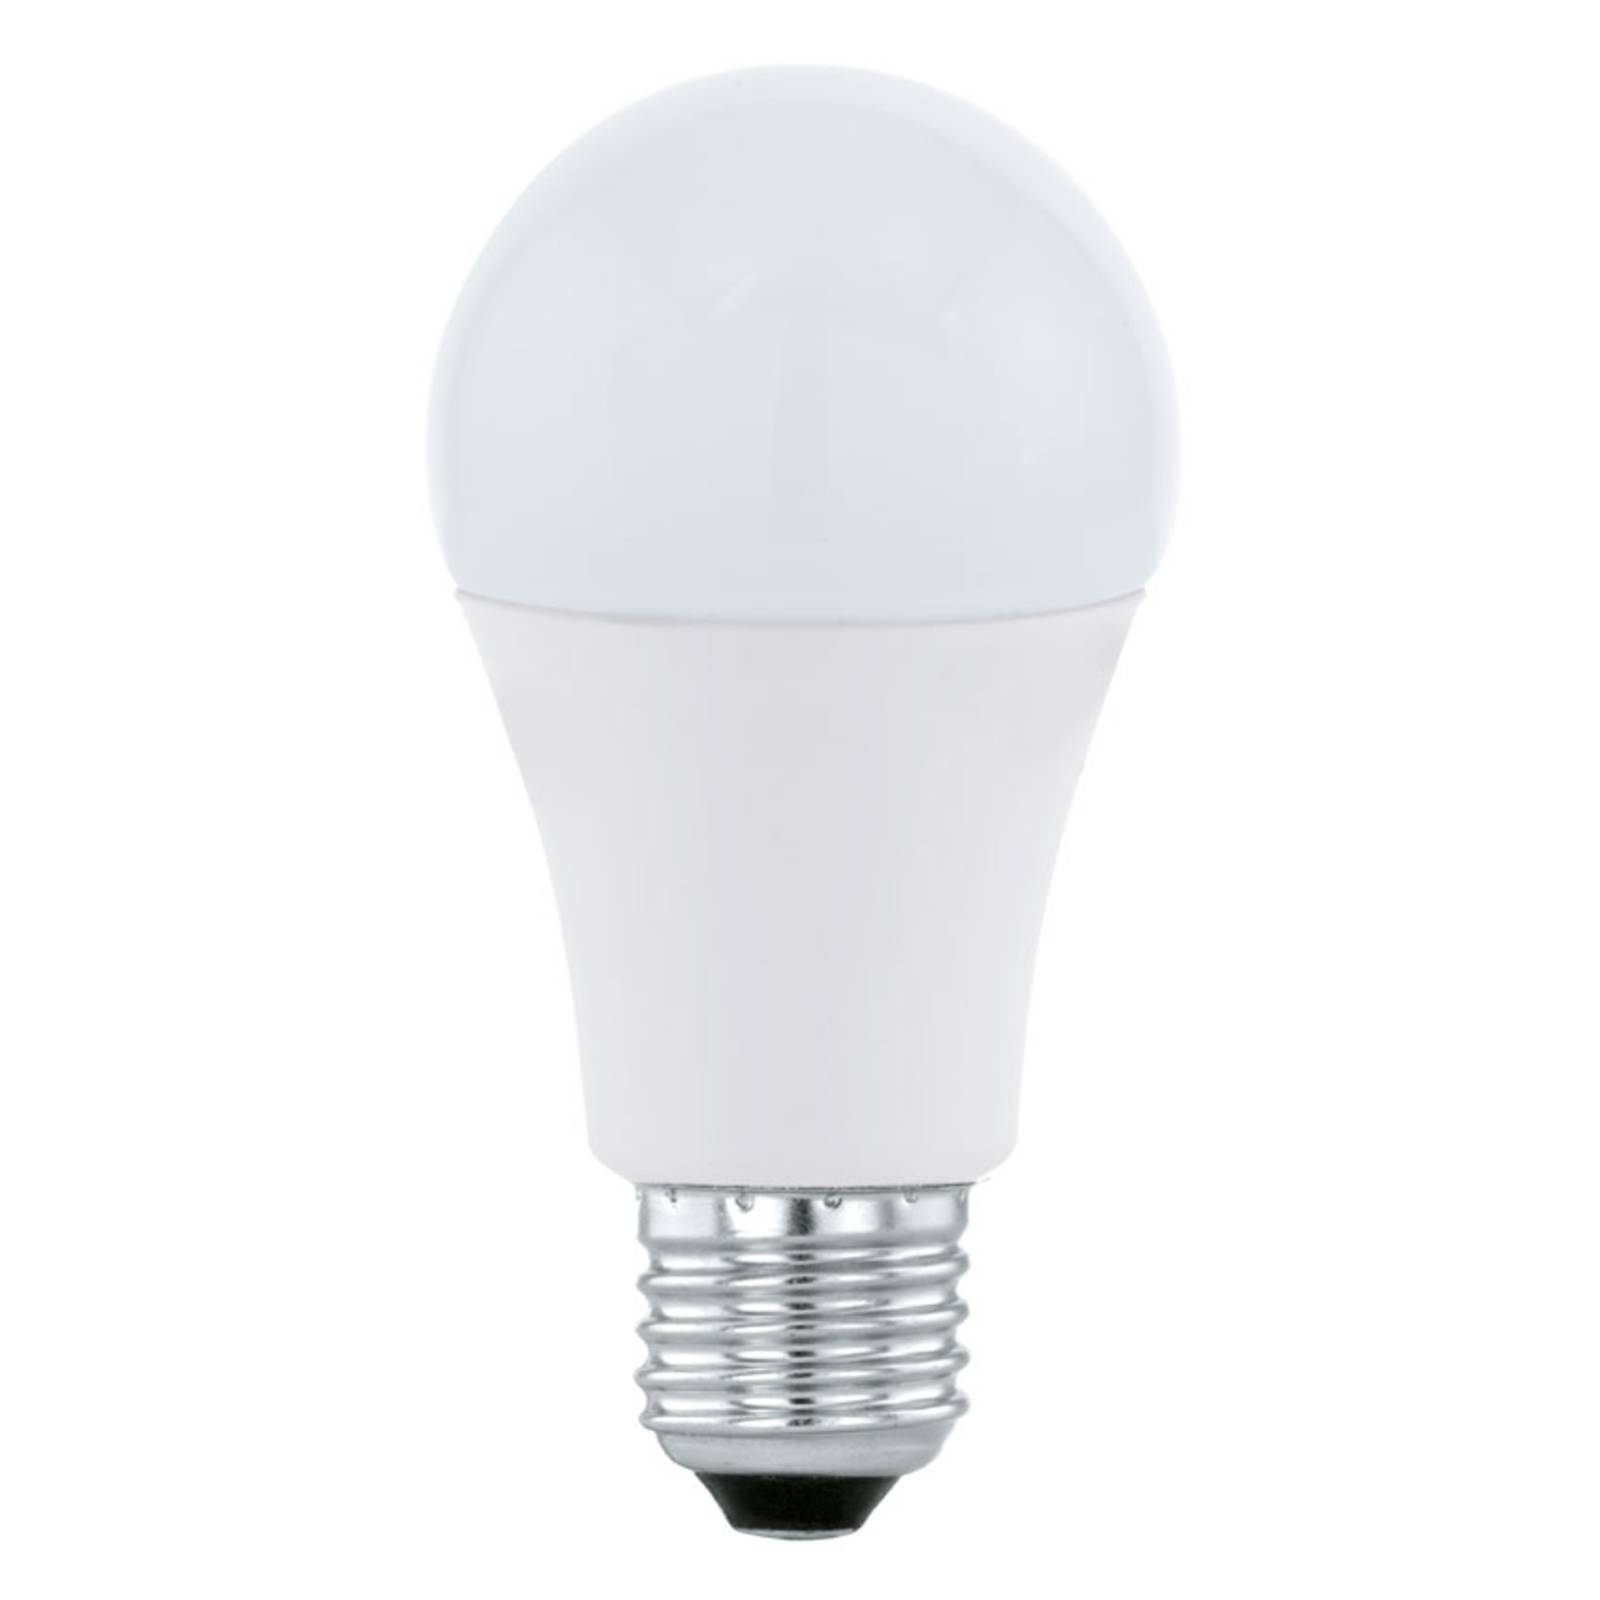 EGLO Ampoule LED E27 A60 11 W, blanc chaud, opale